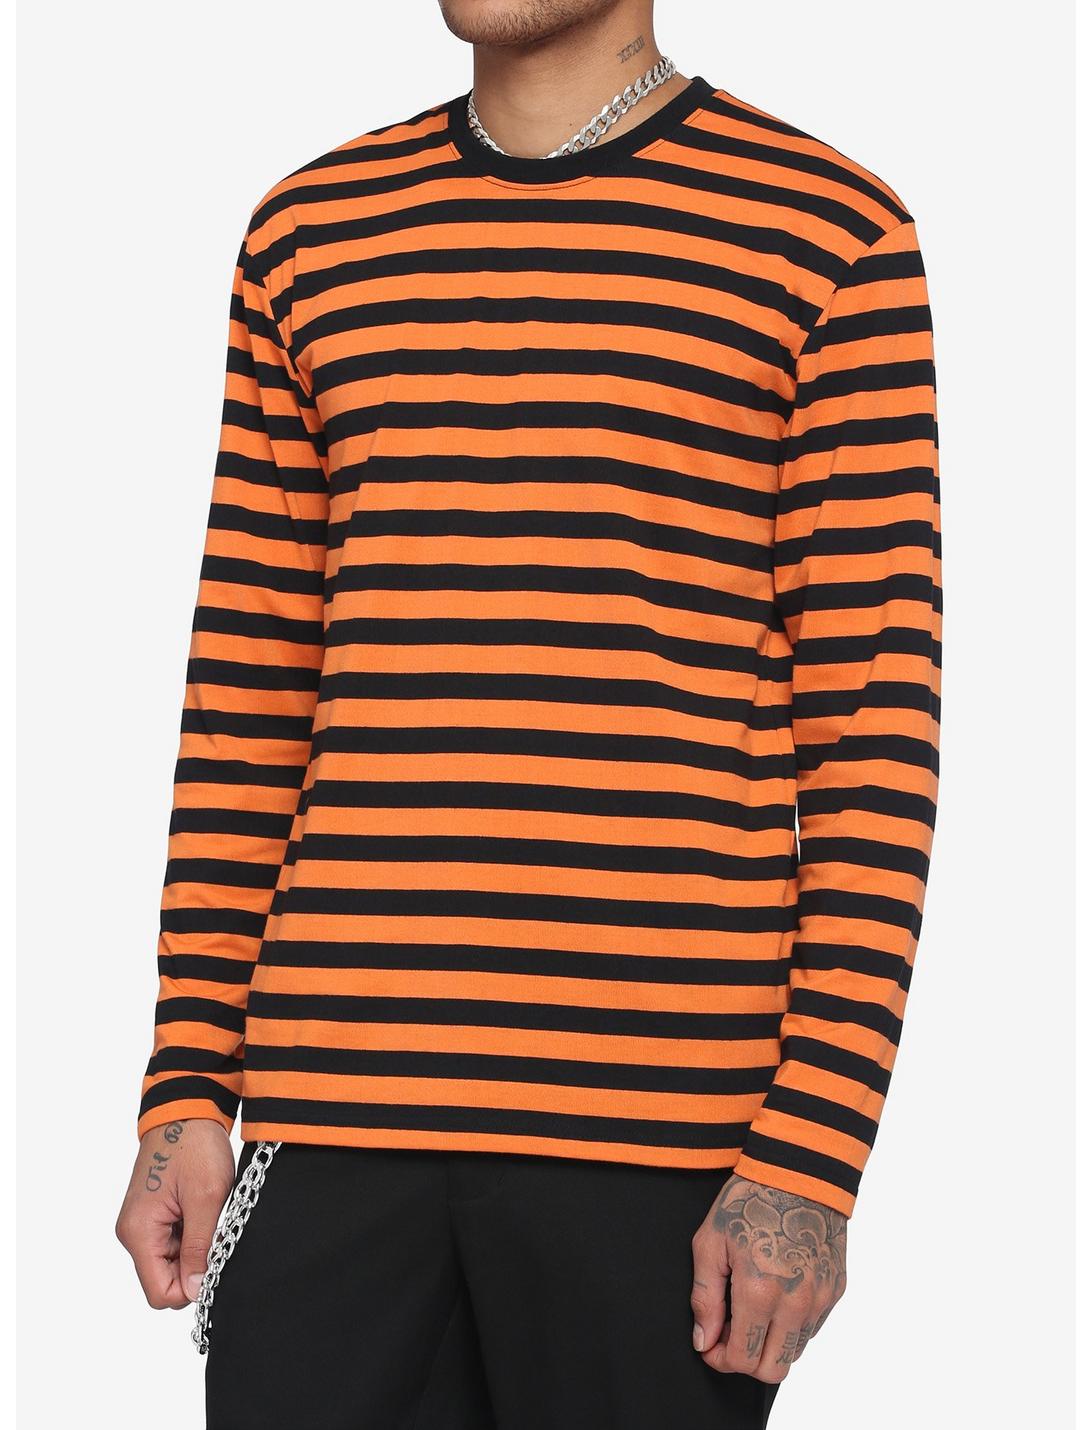 Orange & Black Stripe Long-Sleeve T-Shirt, STRIPE - ORANGE, hi-res